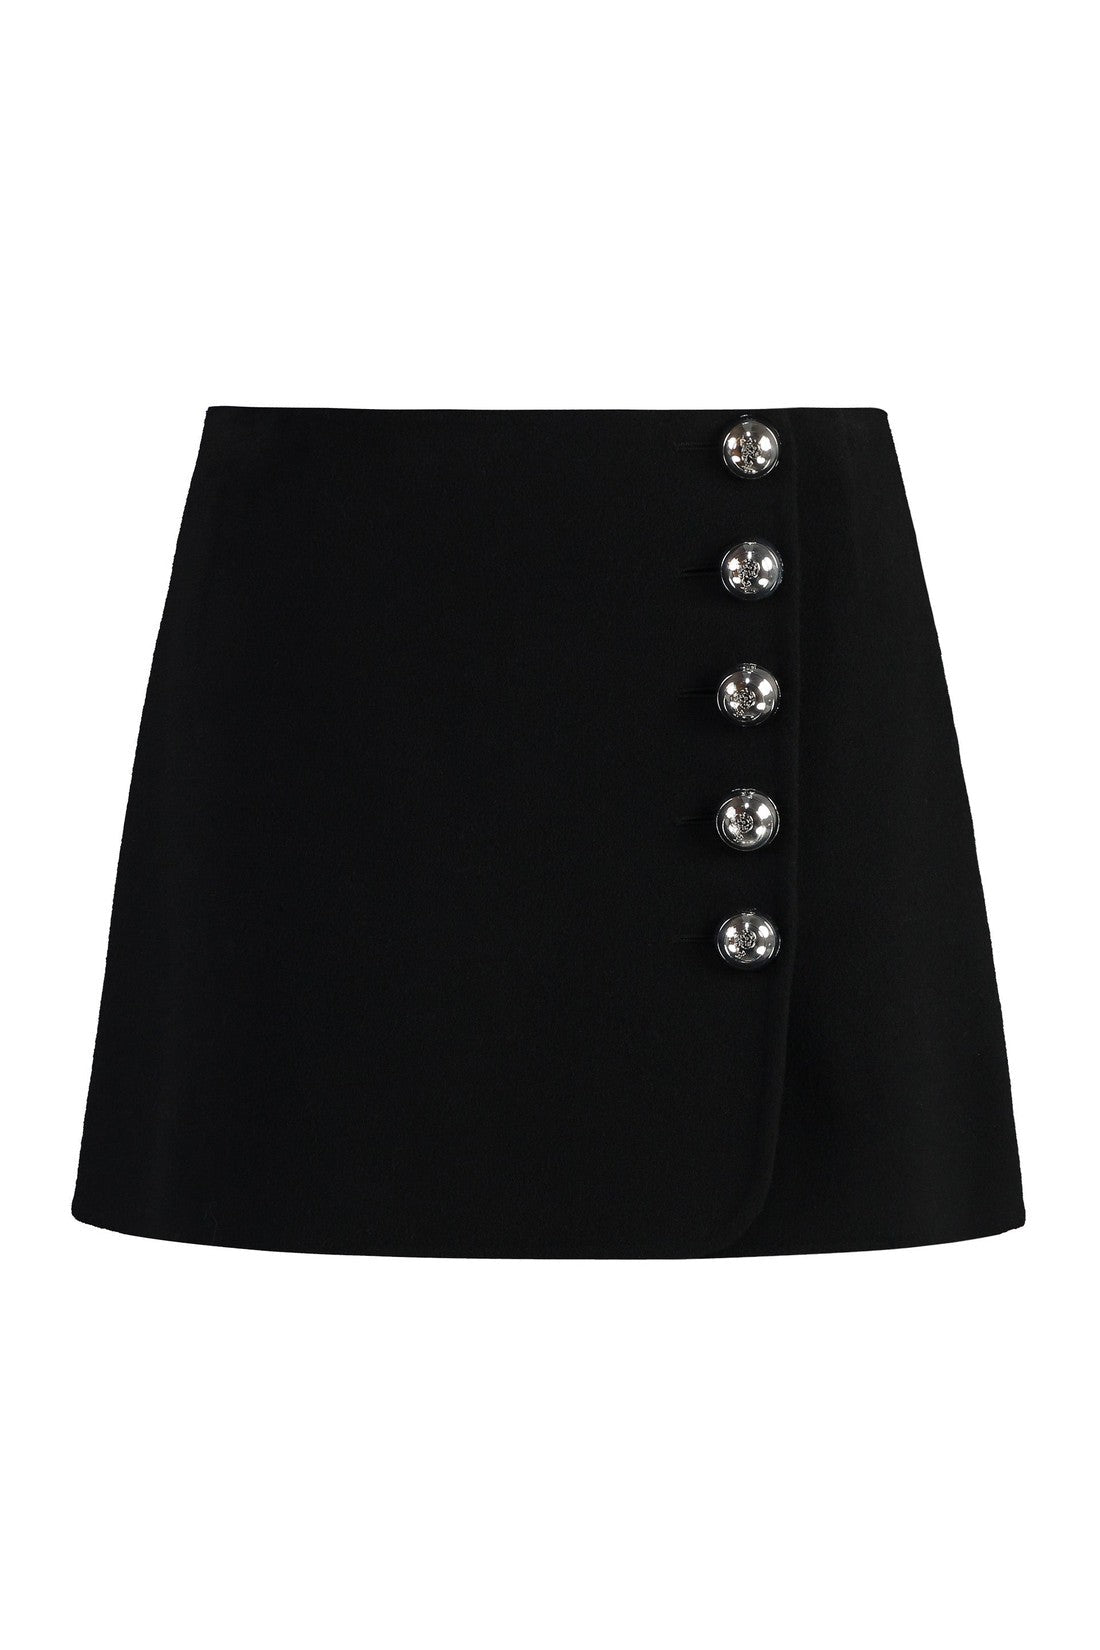 PUCCI-OUTLET-SALE-Wool mini skirt-ARCHIVIST